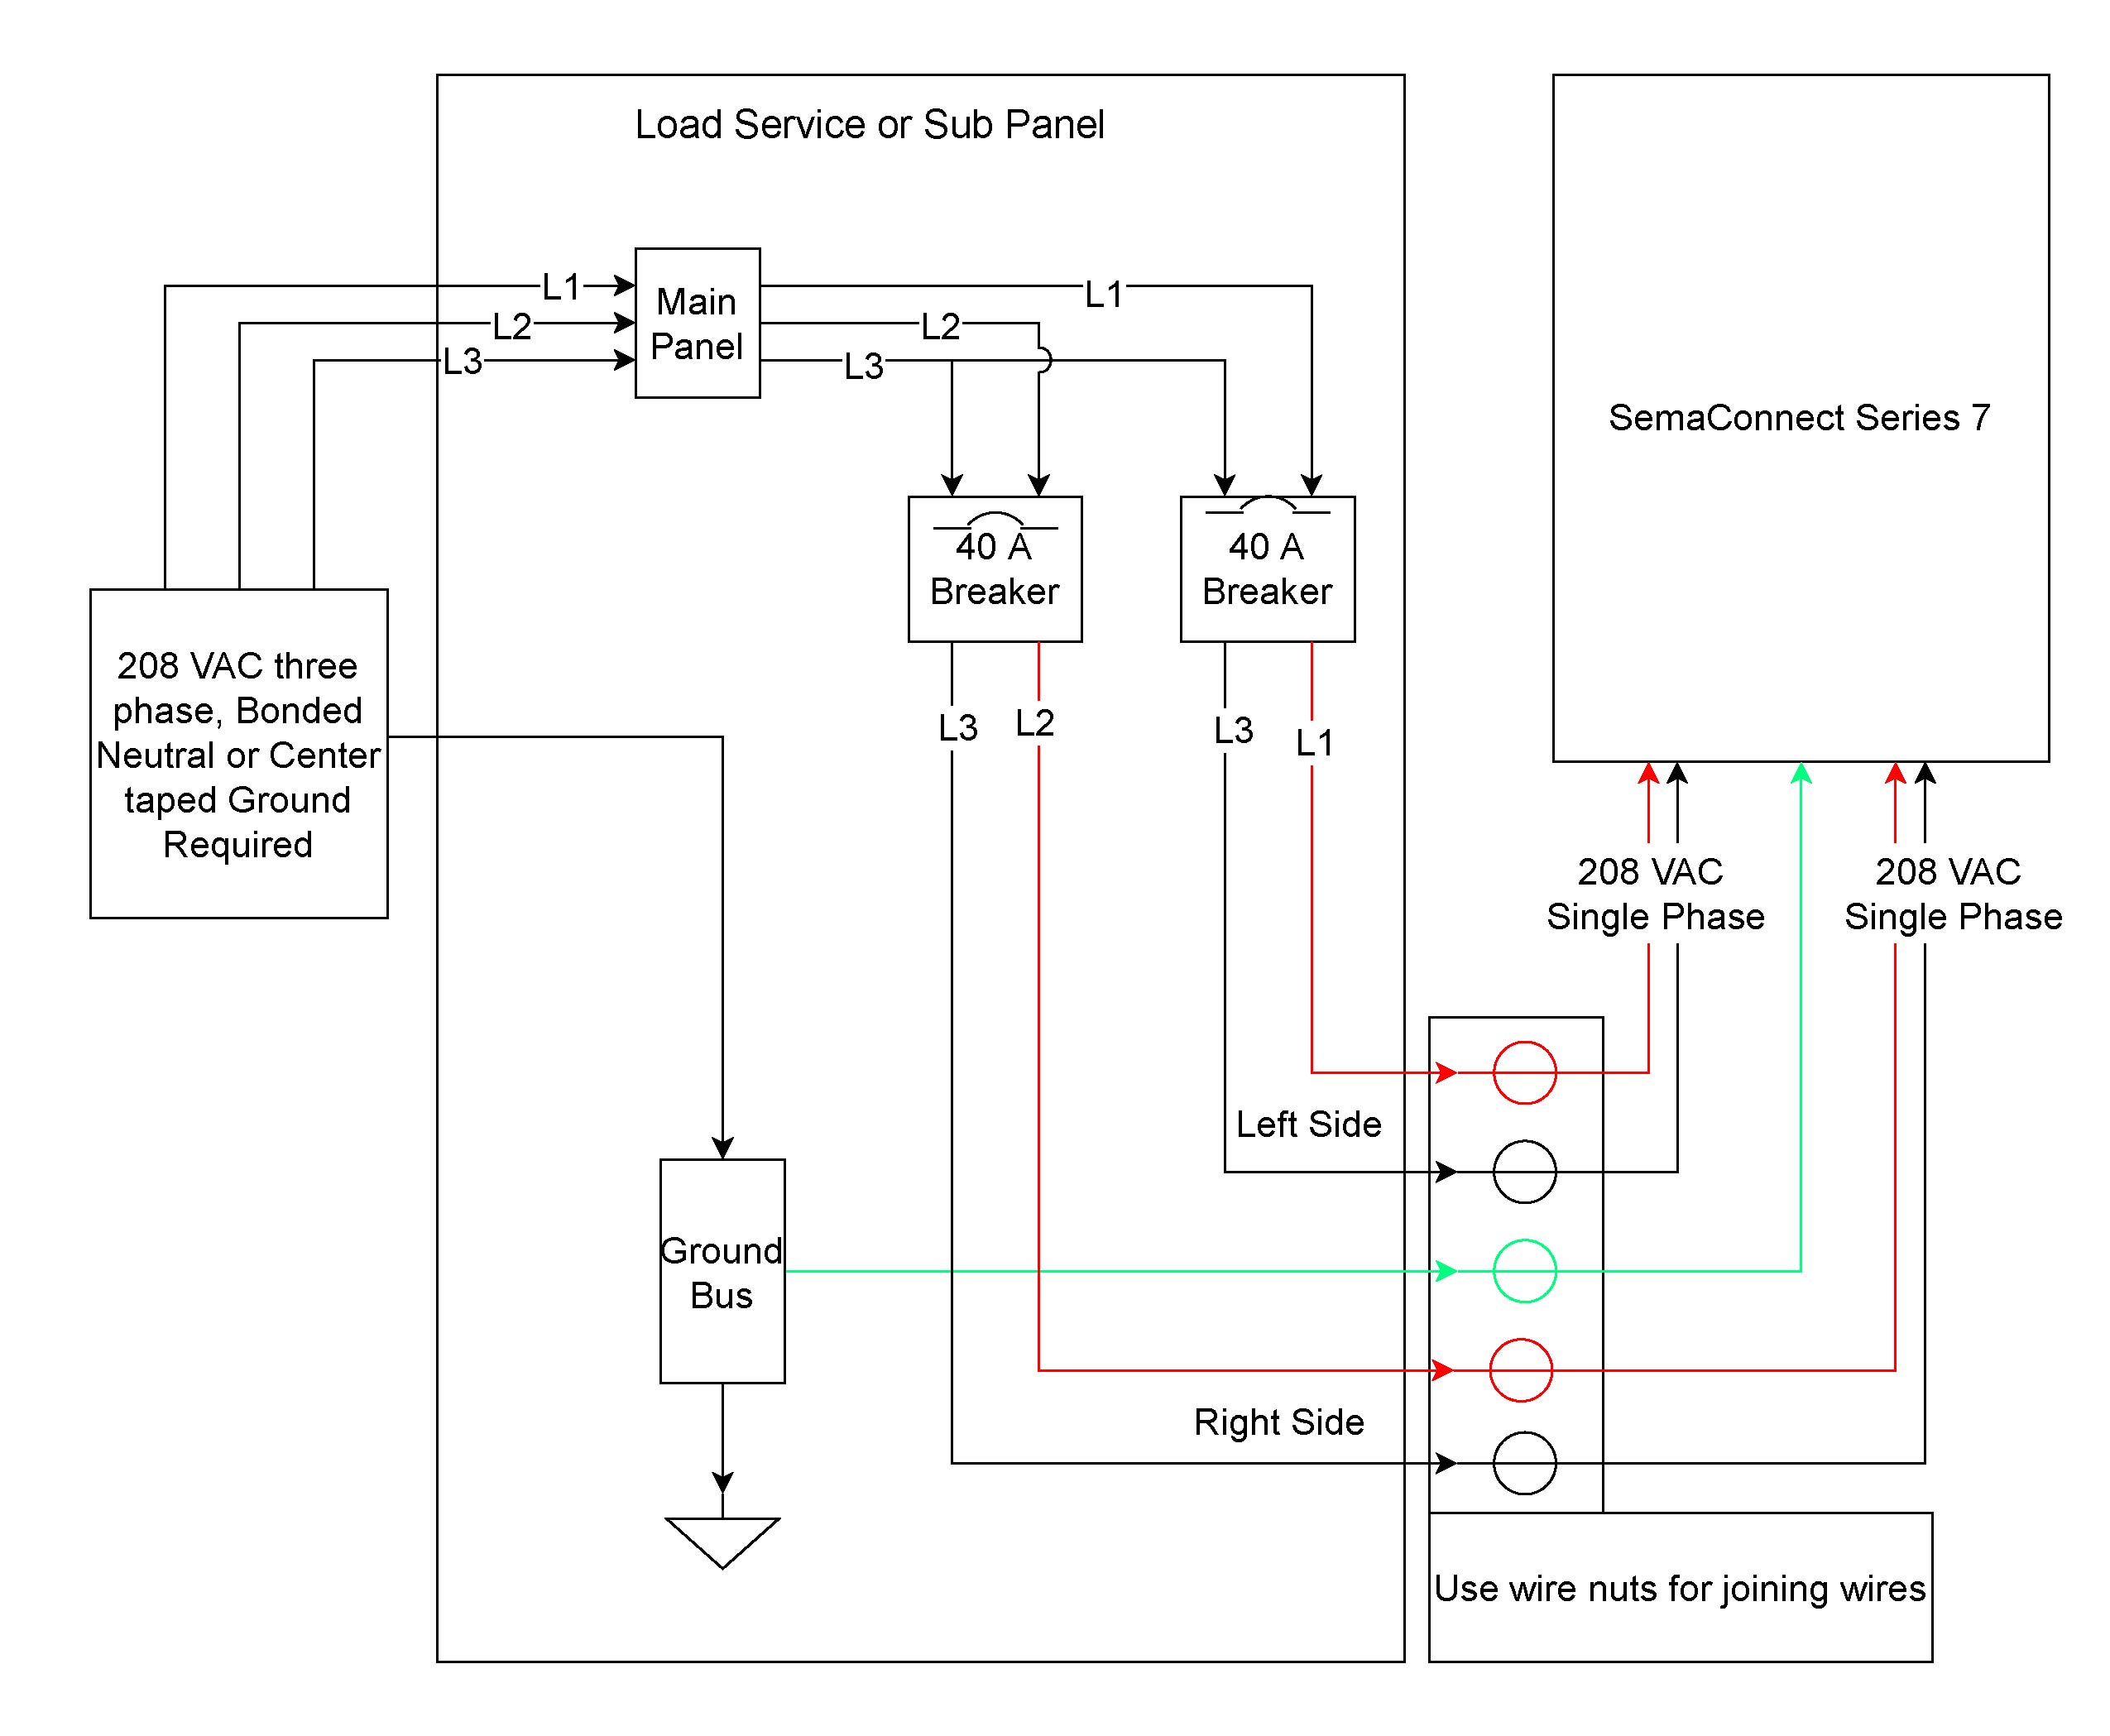 titan 8500 generator wiring diagram